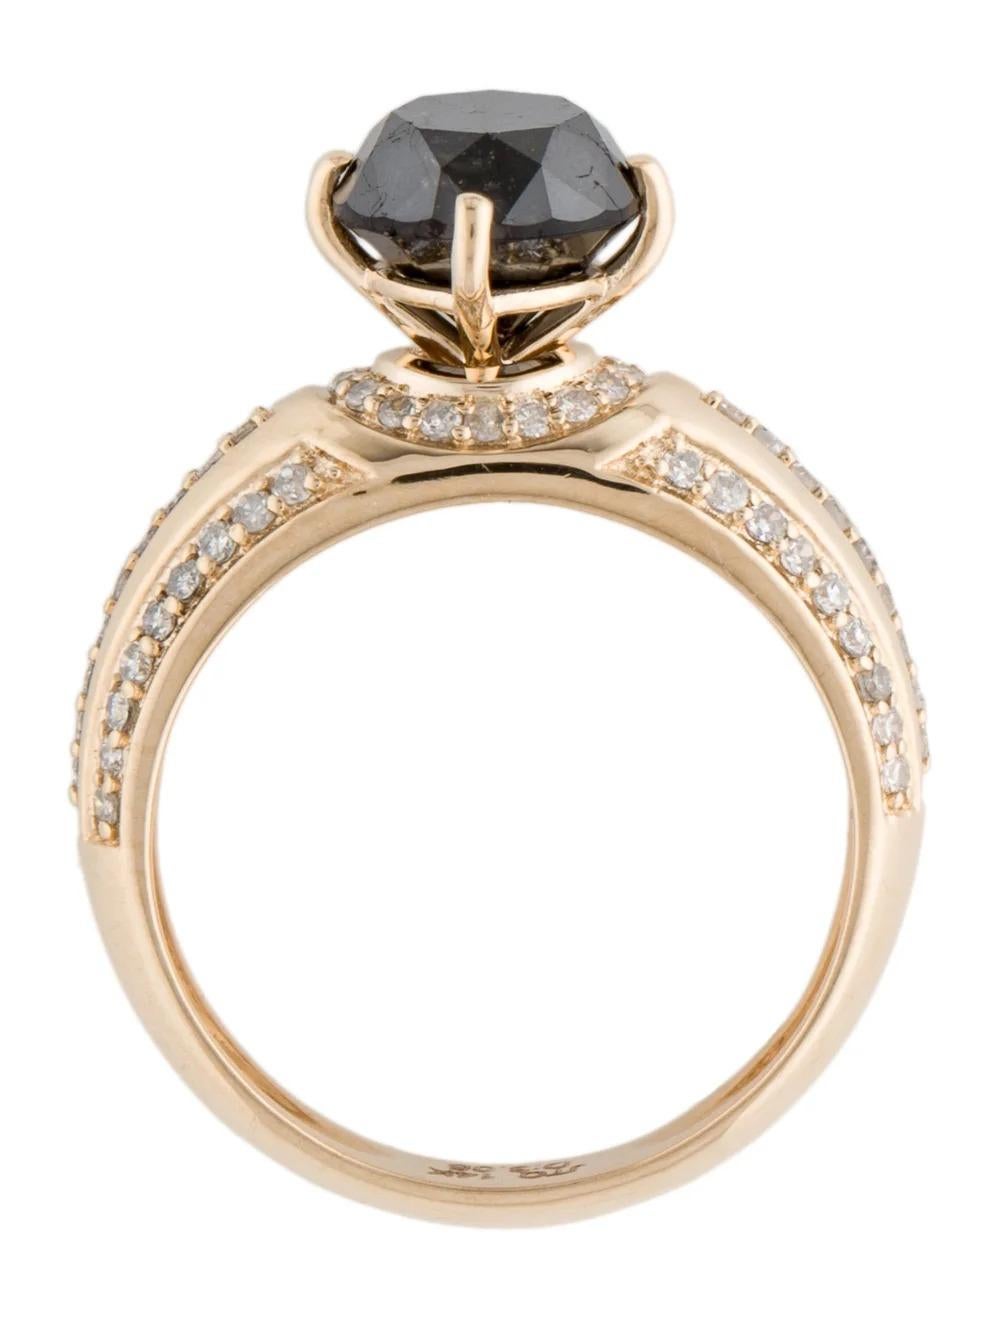 Women's 14K Diamond Cocktail Ring 2.69ctw - Size 6.75 - Statement Jewelry, Luxury Piece For Sale